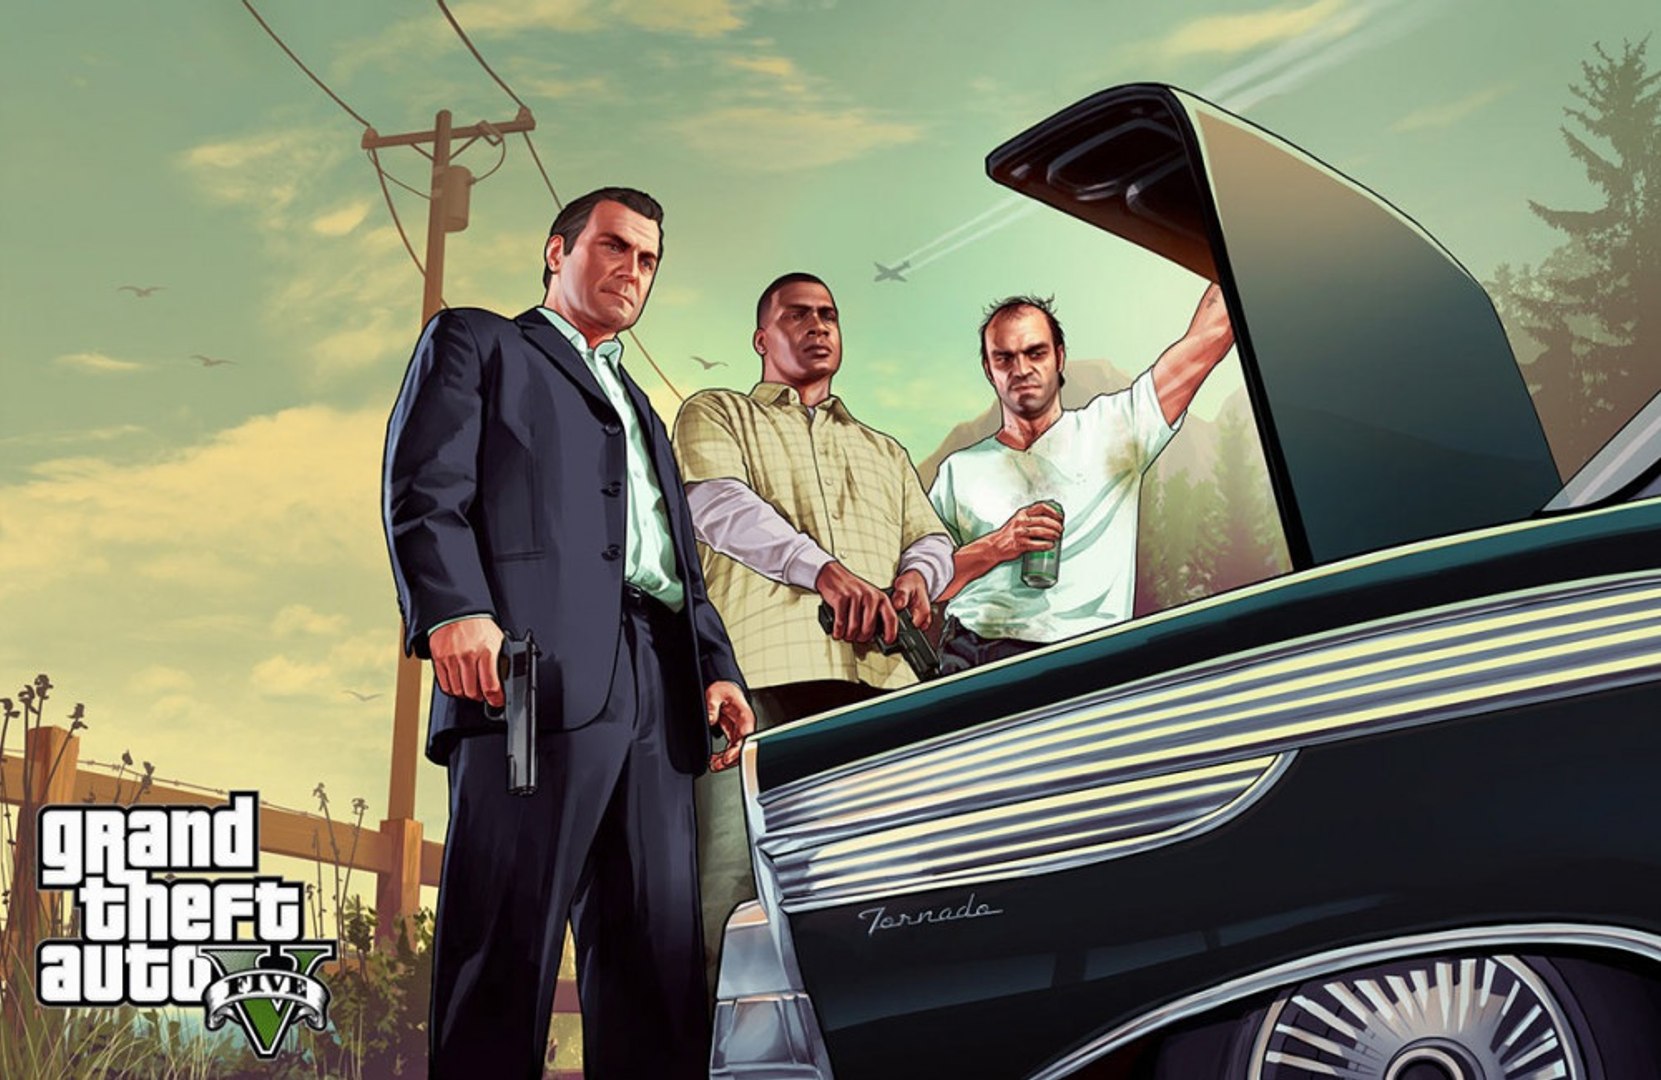 Grand Theft Auto 6' Leak Won't Influence Development